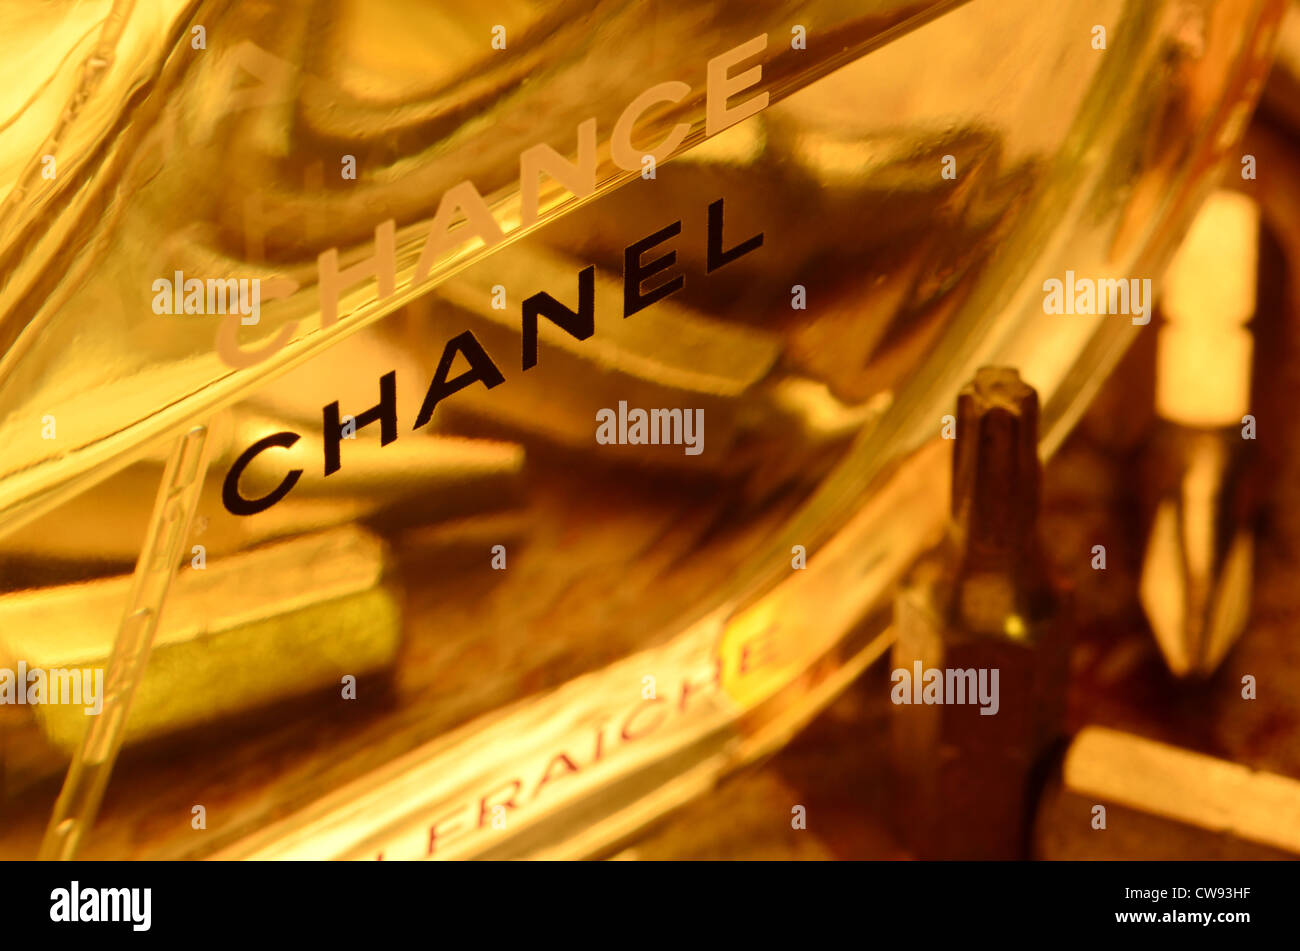 2,849 Bleu De Chanel Royalty-Free Images, Stock Photos & Pictures